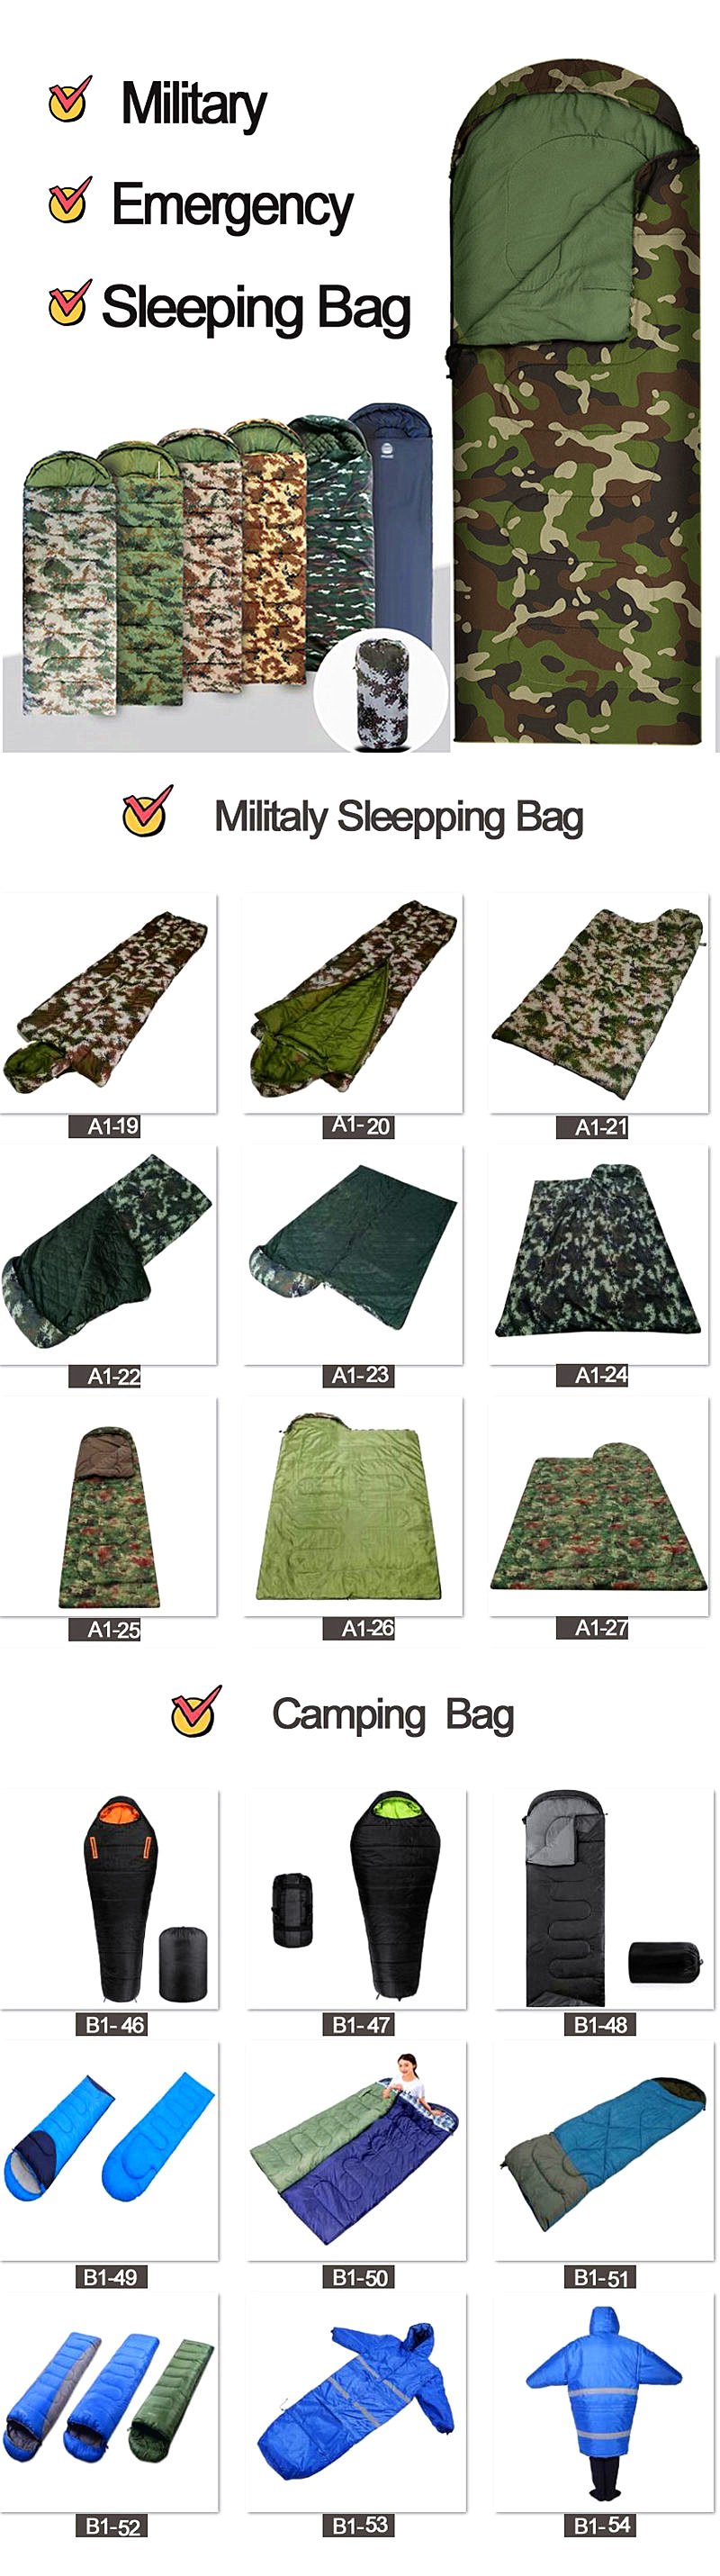 4 Season Camouflage Sleeping Bag